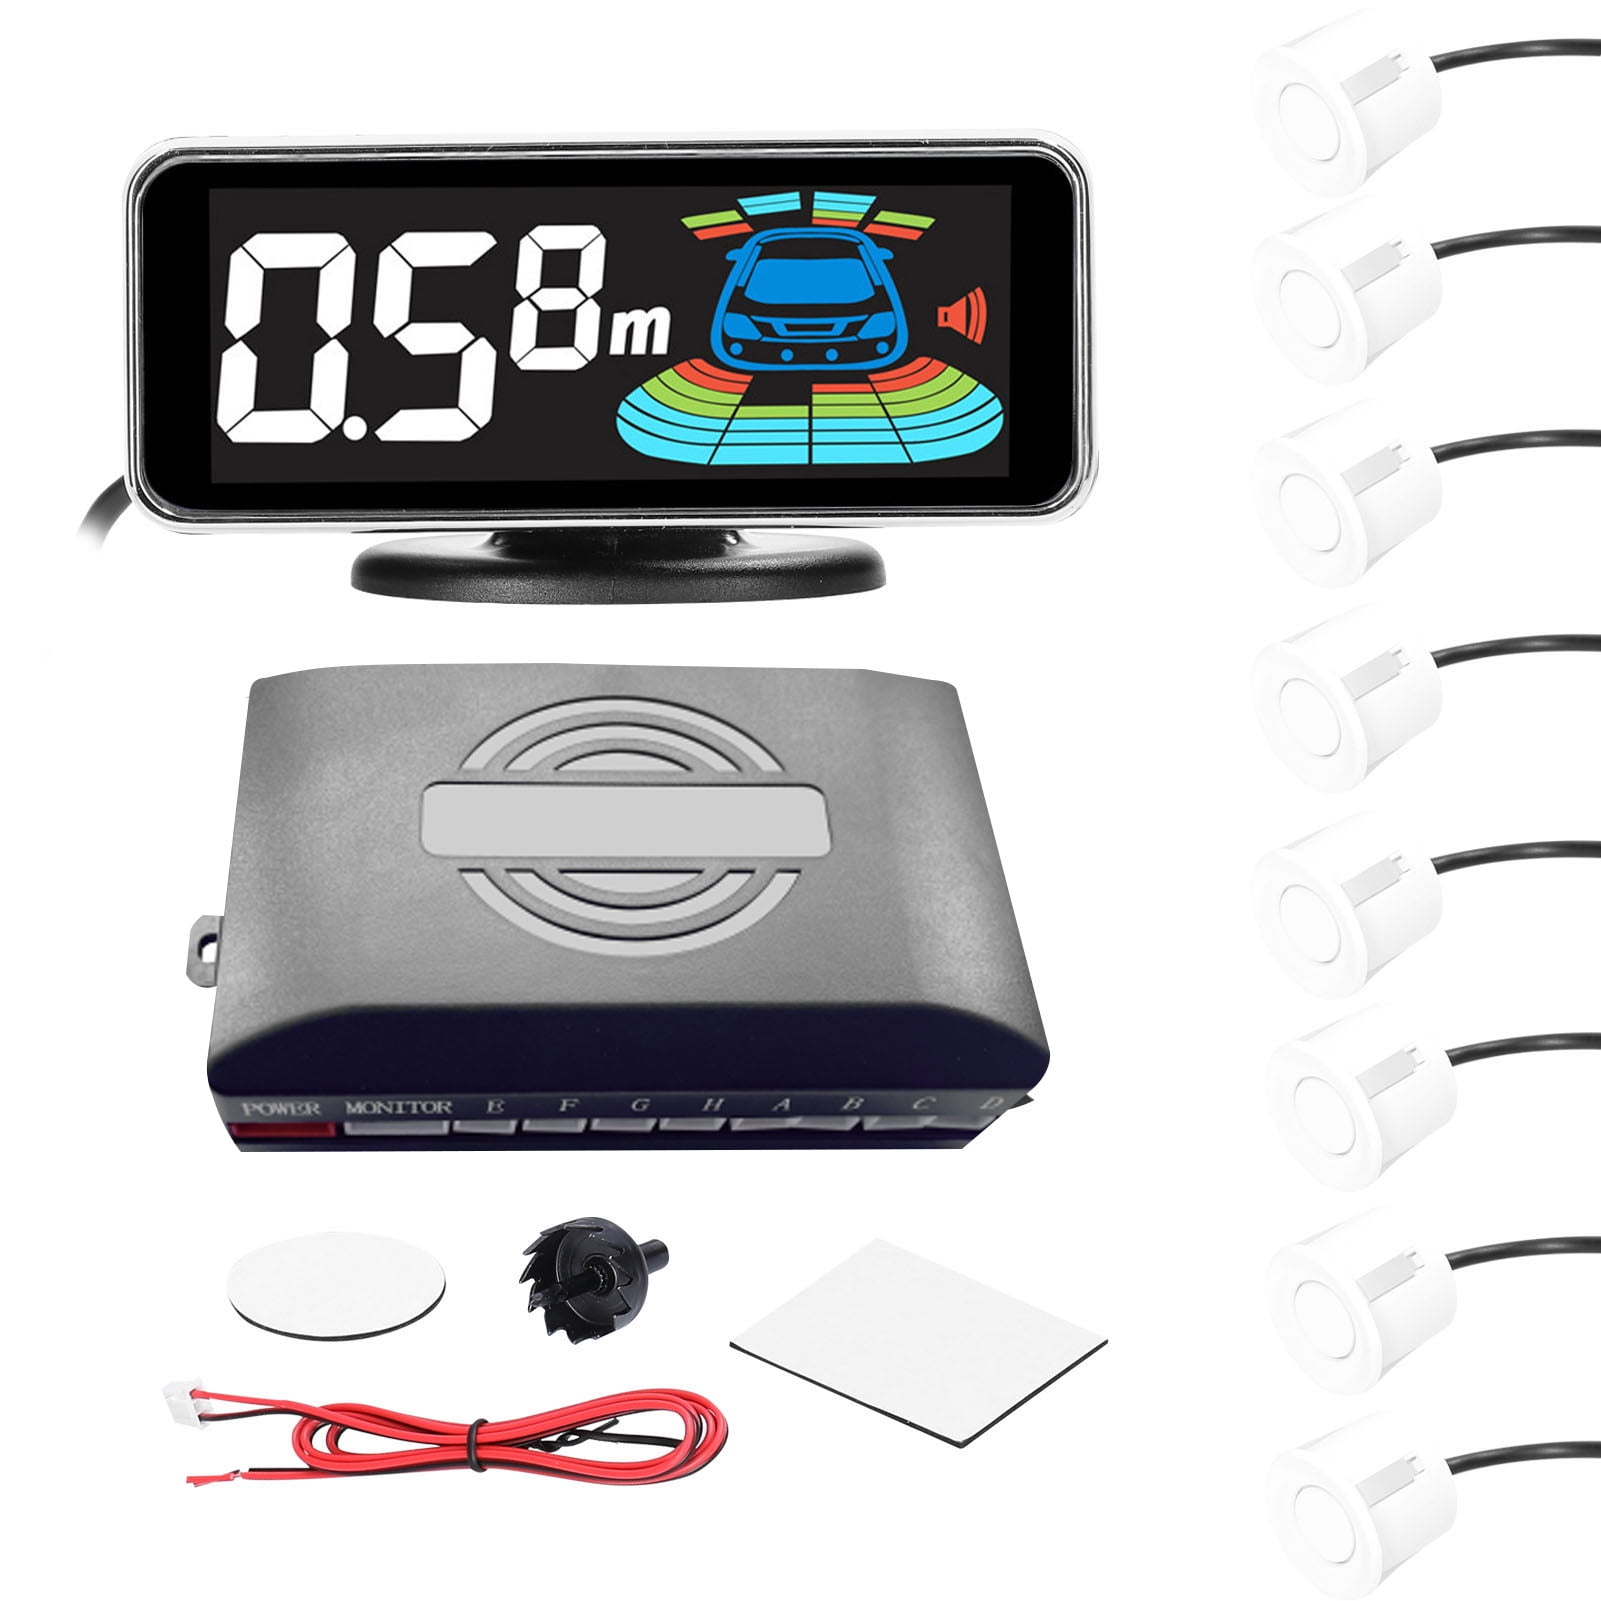 Reverse Parking Sensor Aid Kit with Audio Buzzer Alarm 4 Reversing Sensors White 